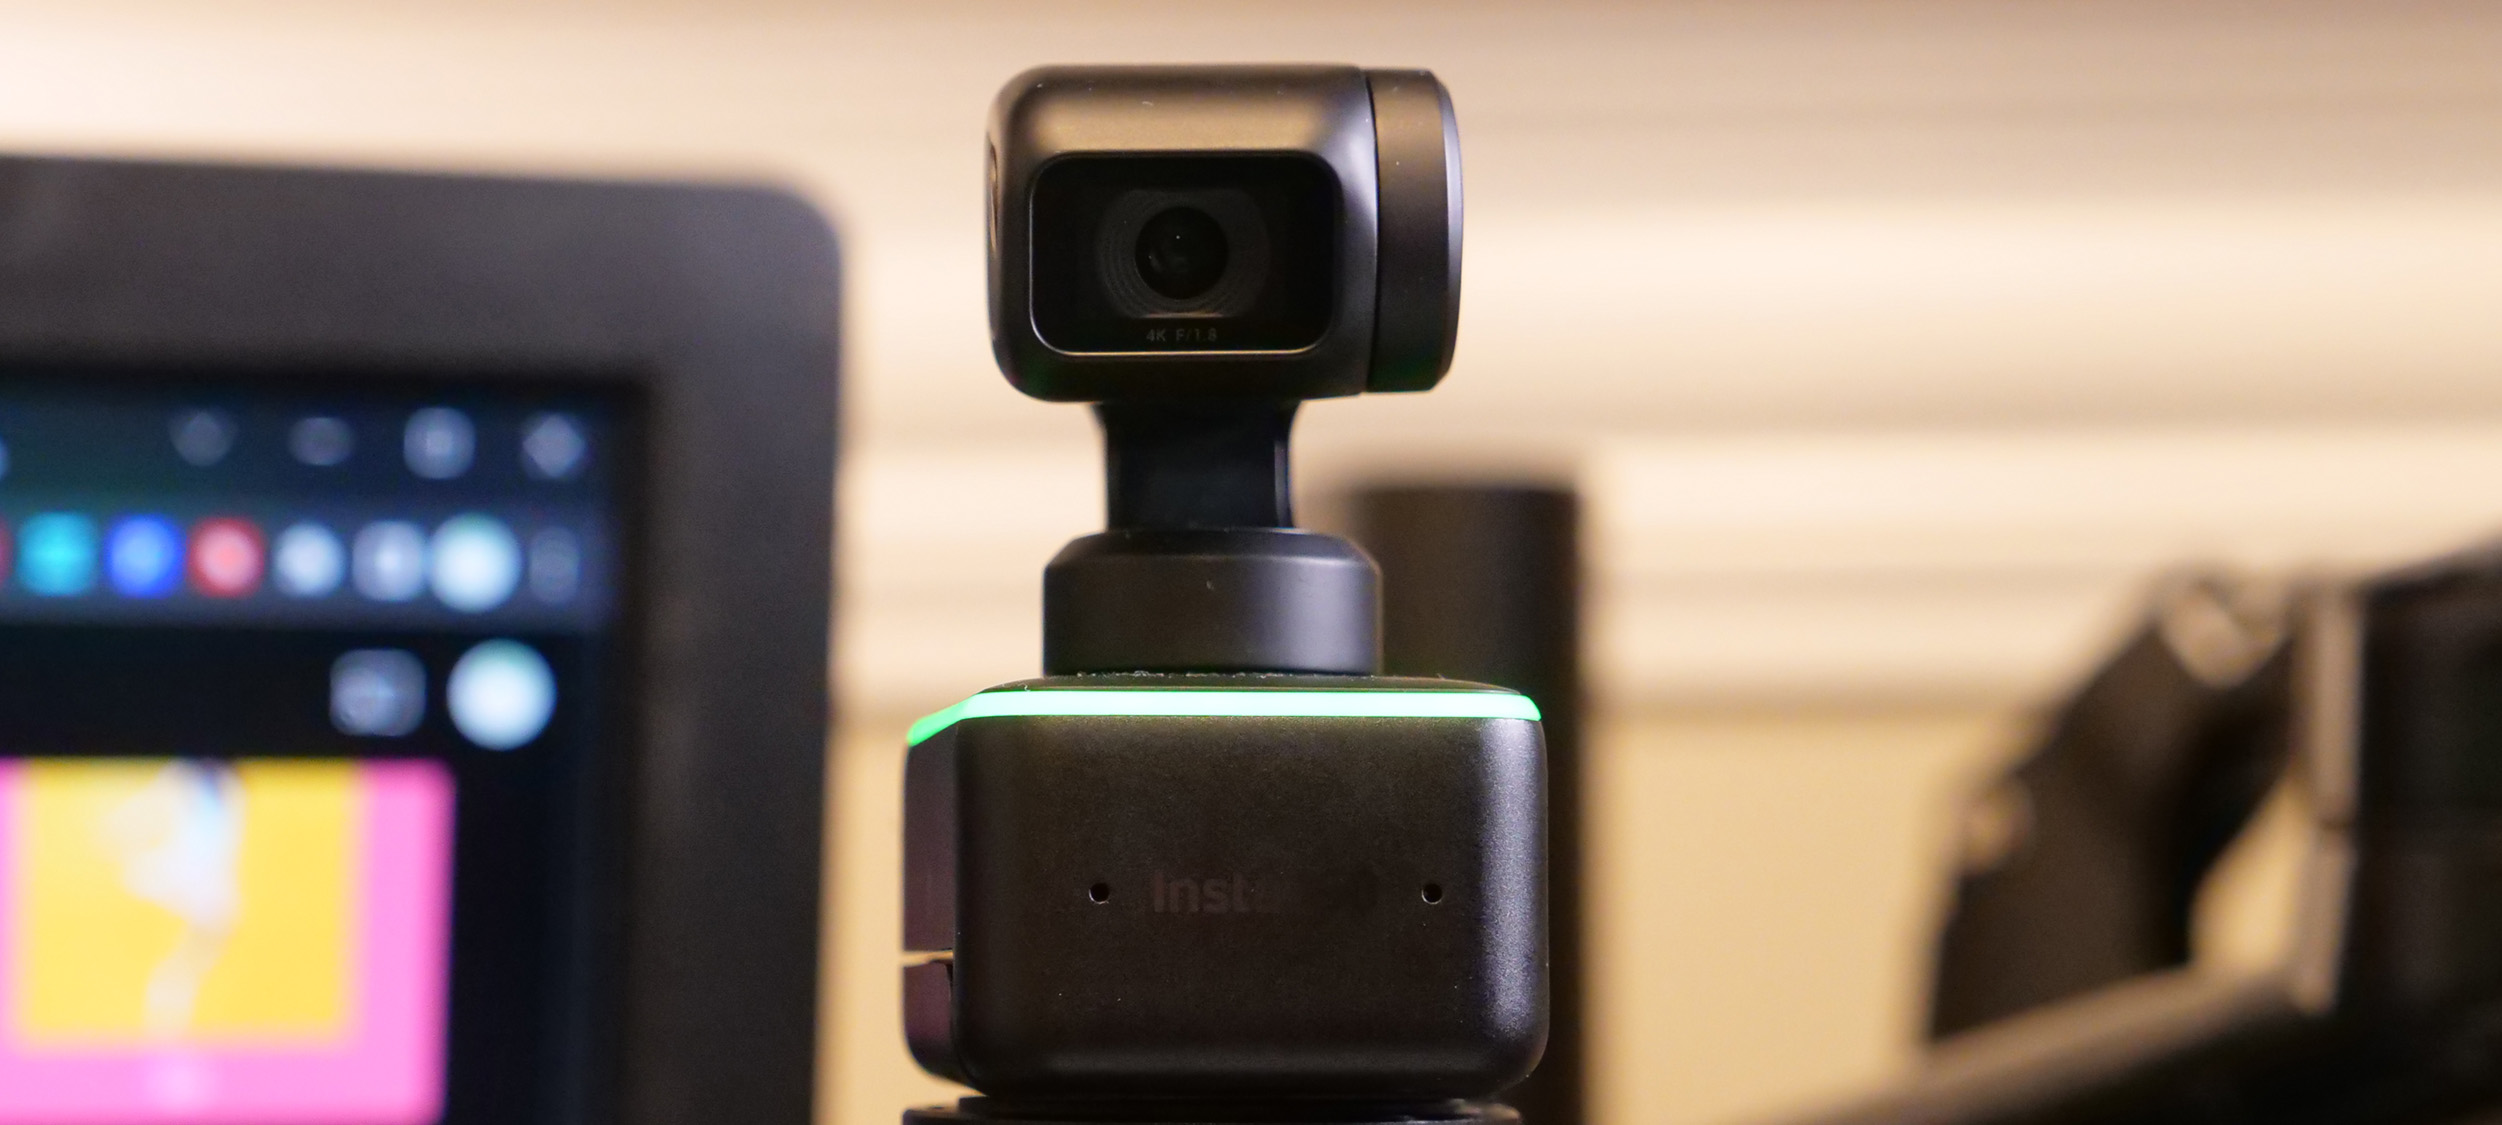 Insta360 Link webcam review: Astounding image and innovation